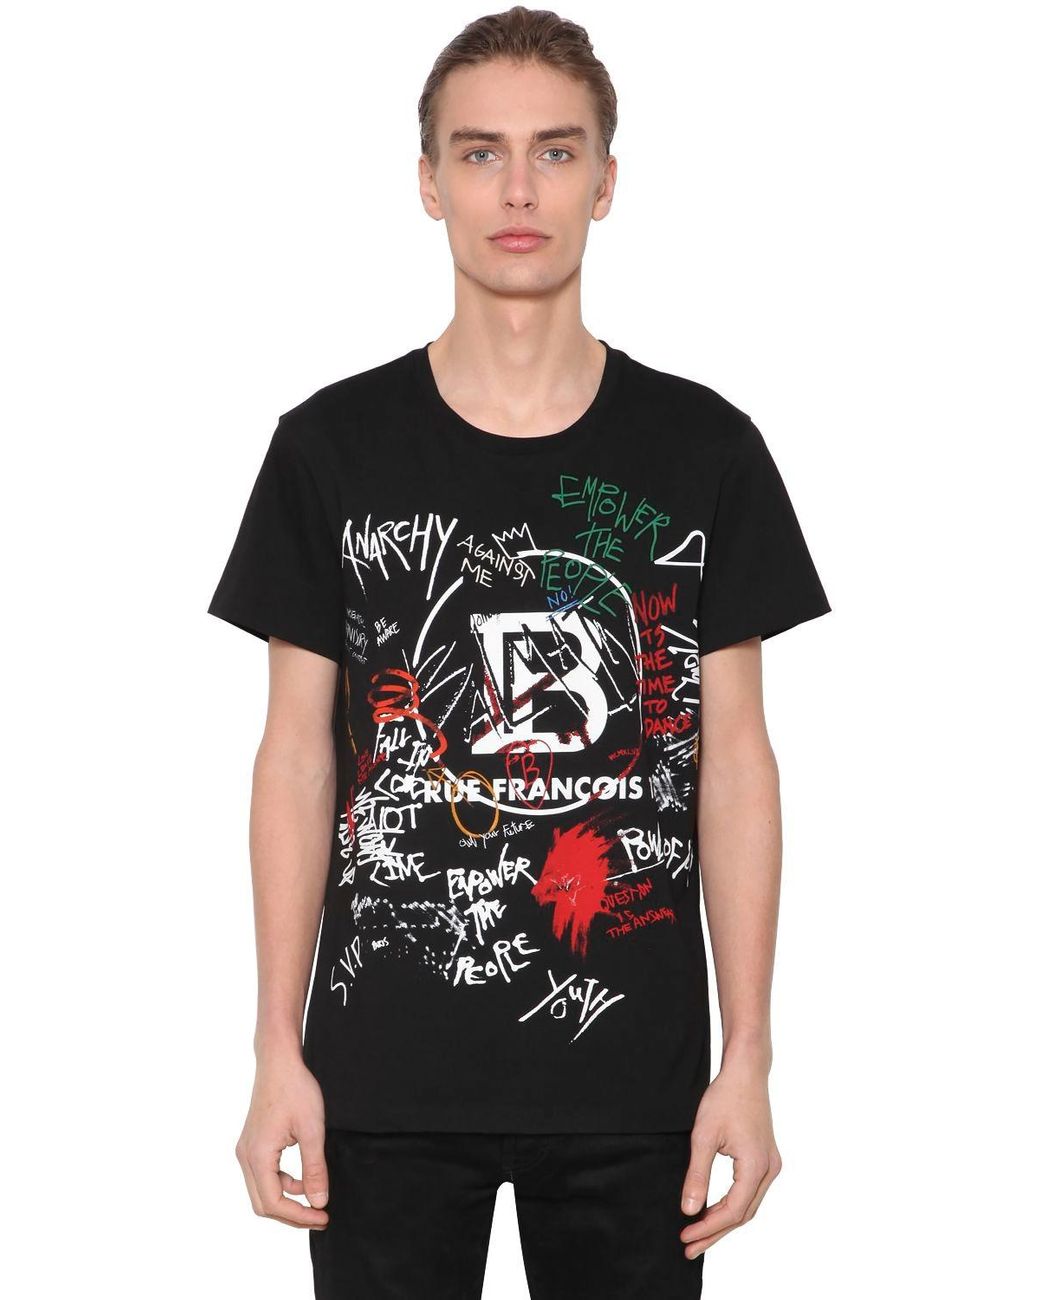 Balmain Printed Cotton Jersey T-shirt in Black for Men - Lyst